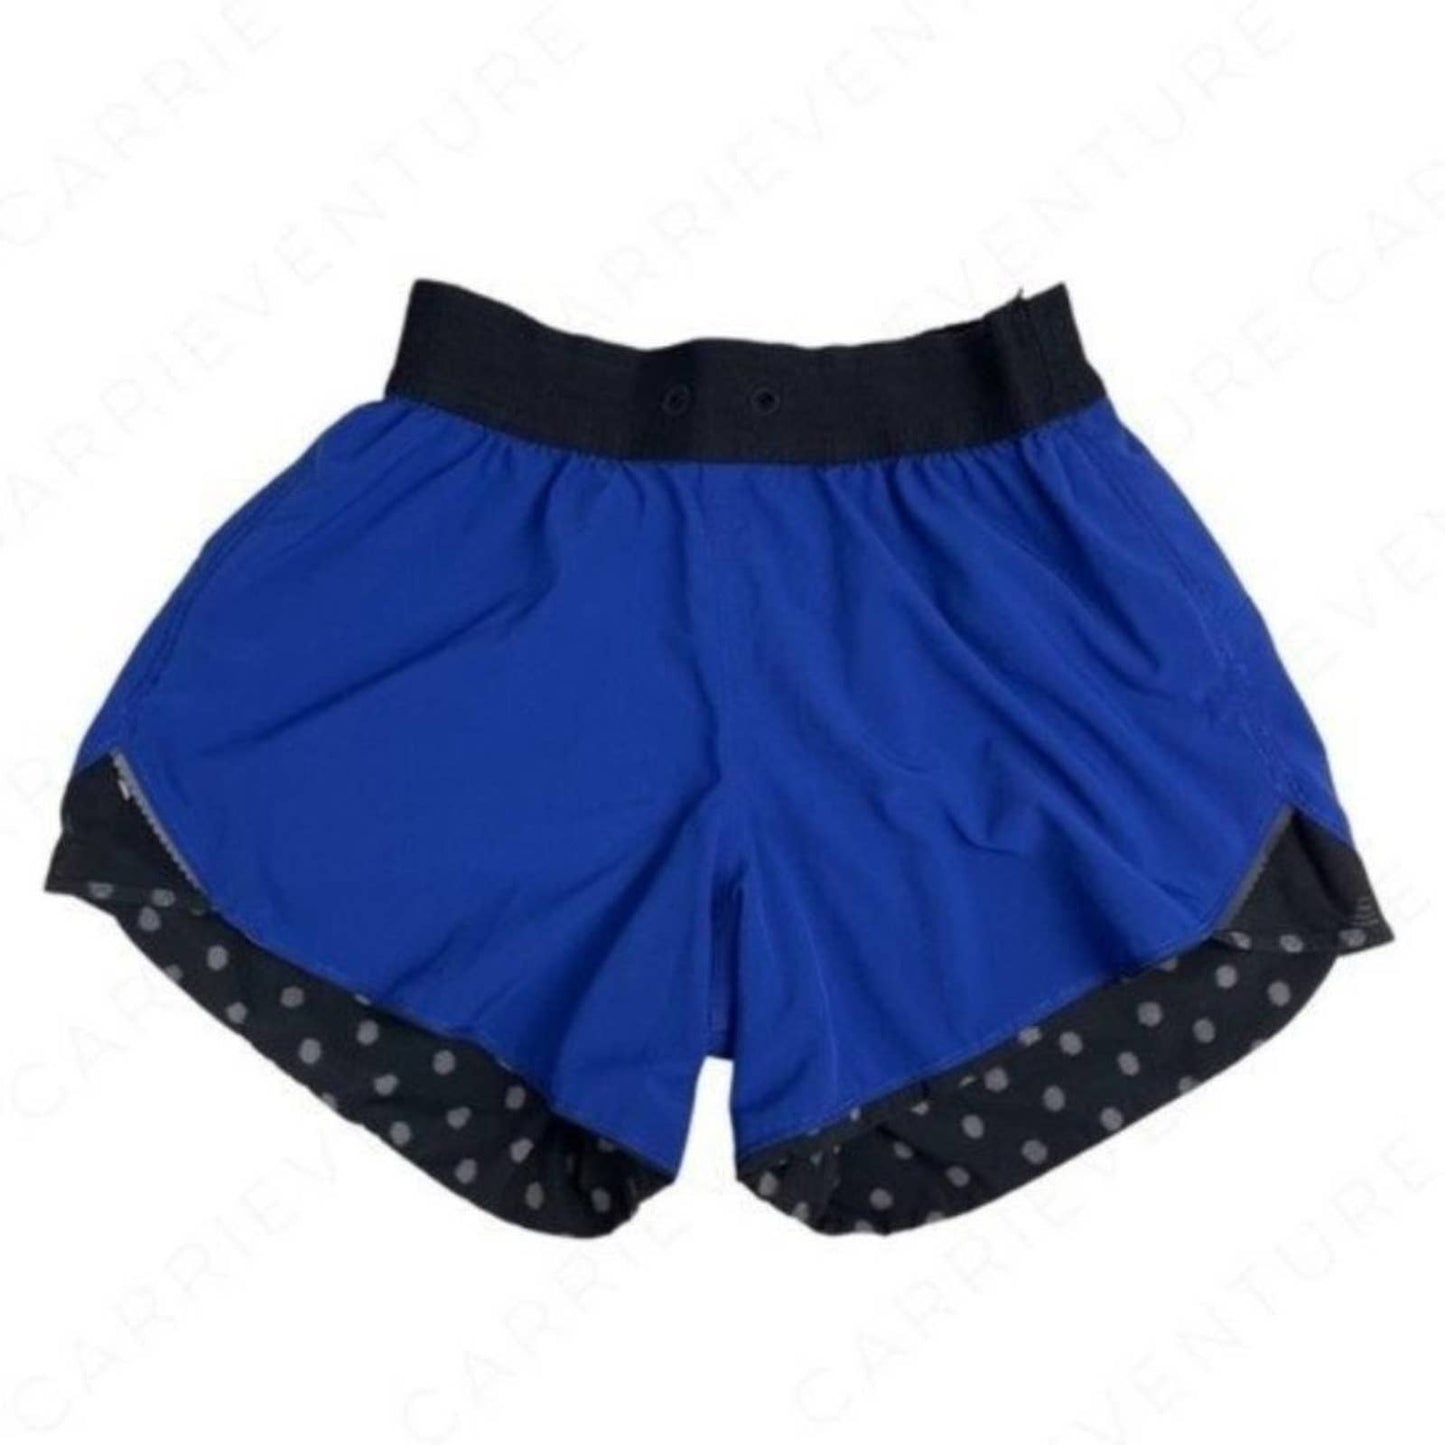 Lululemon Go The Distance Reversible Shorts Ghost Dot Black Slate Bright Blue Size 4